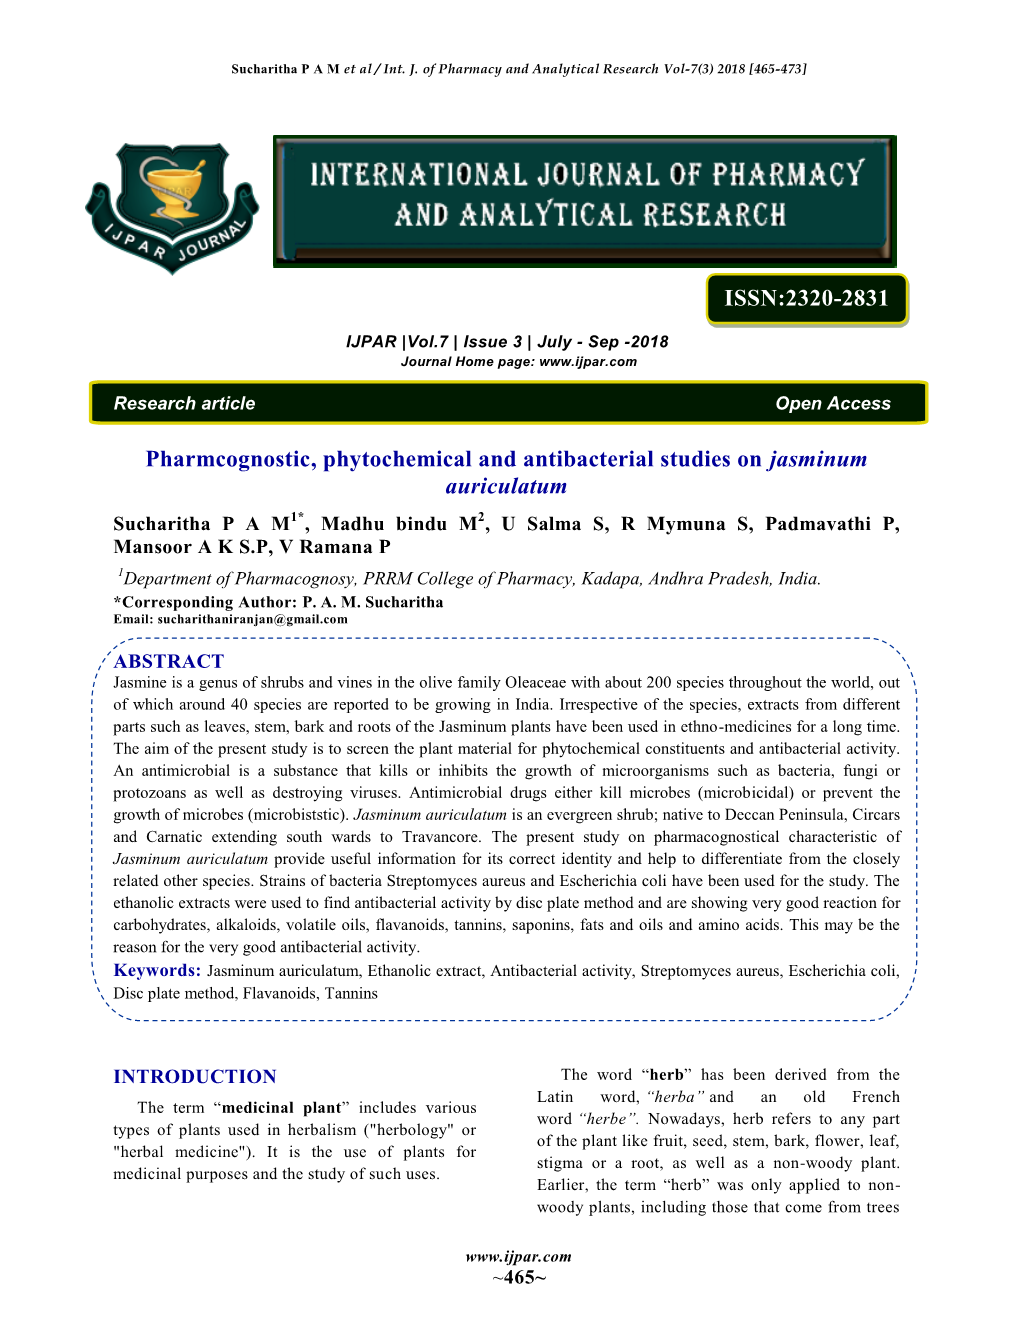 Pharmcognostic, Phytochemical and Antibacterial Studies on Jasminum Auriculatum ISSN:2320-2831